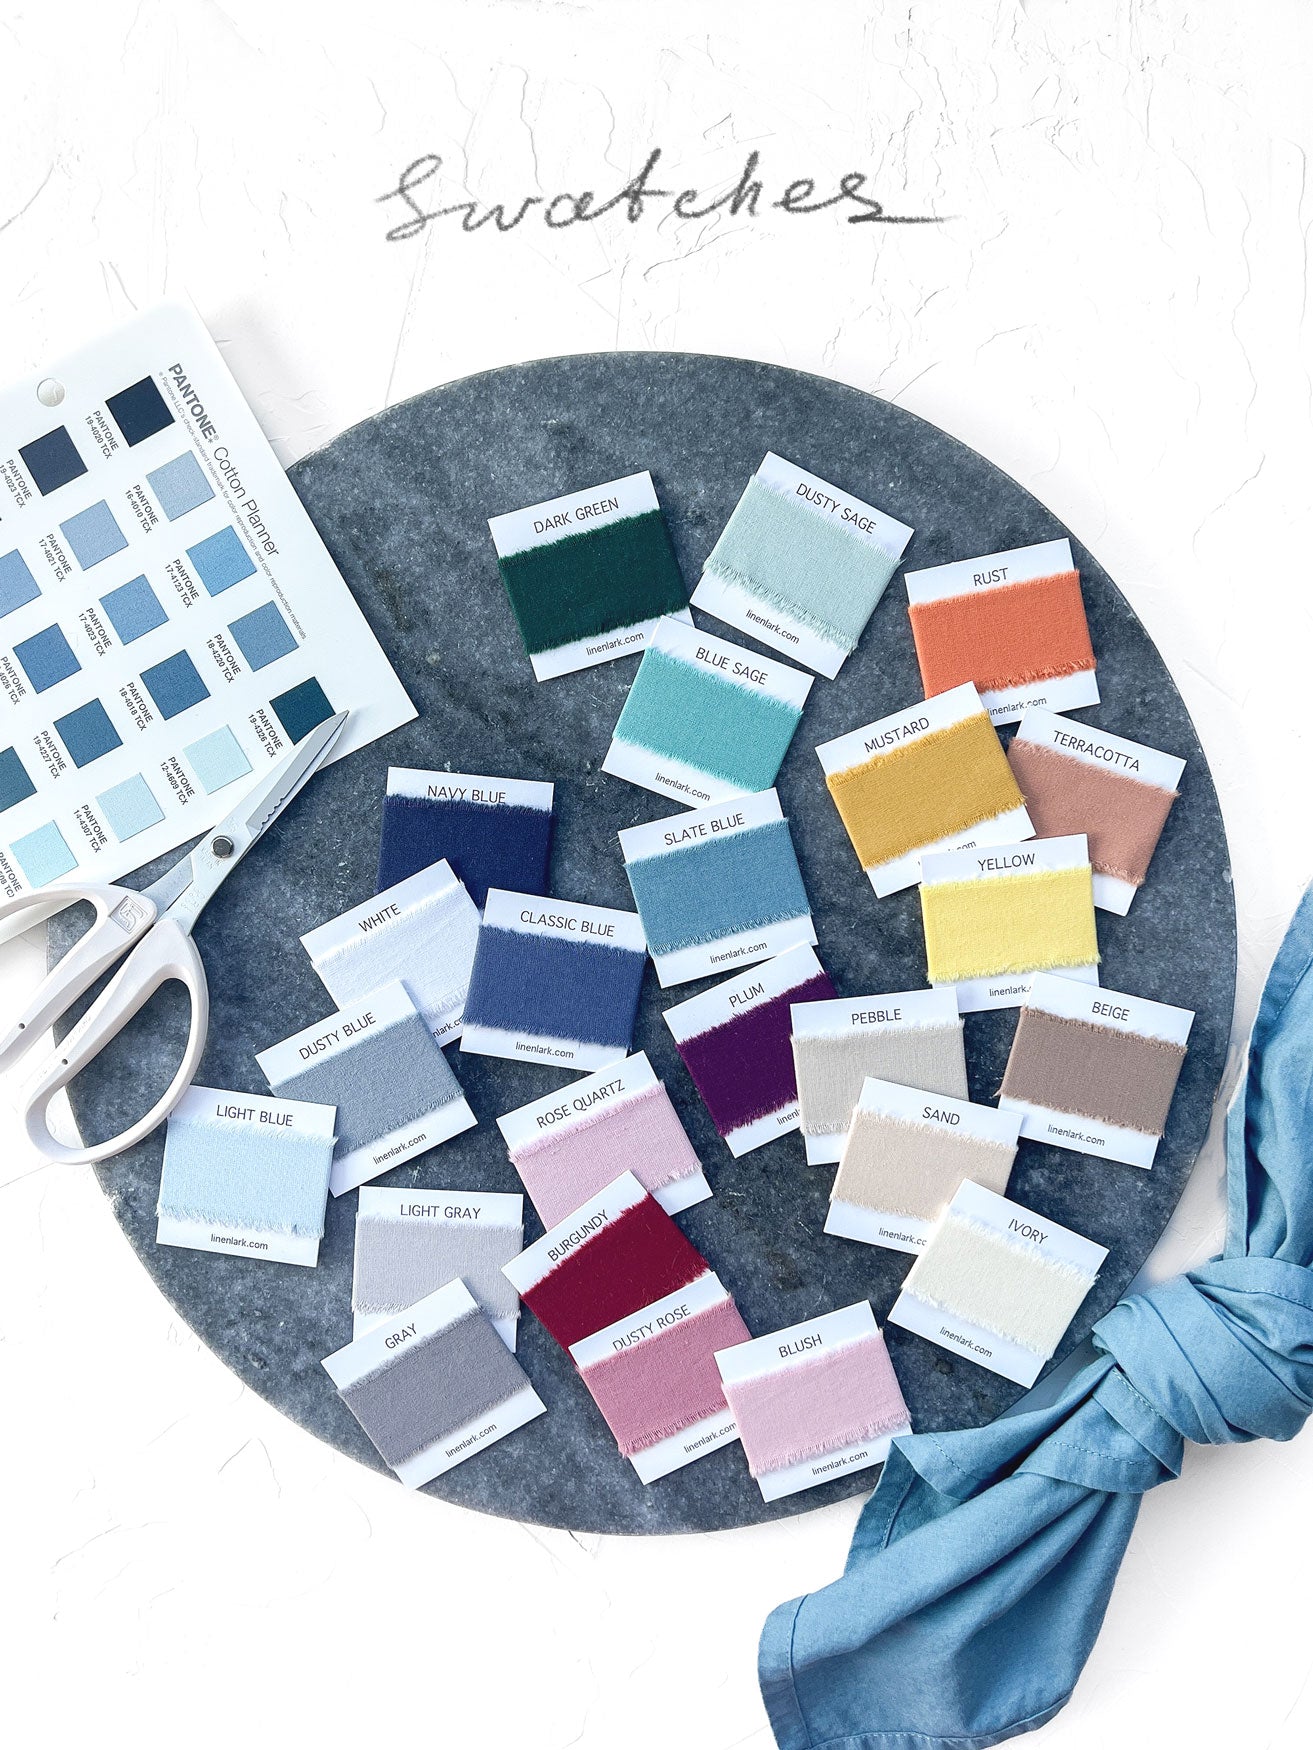 Color samples of cloth cotton napkins